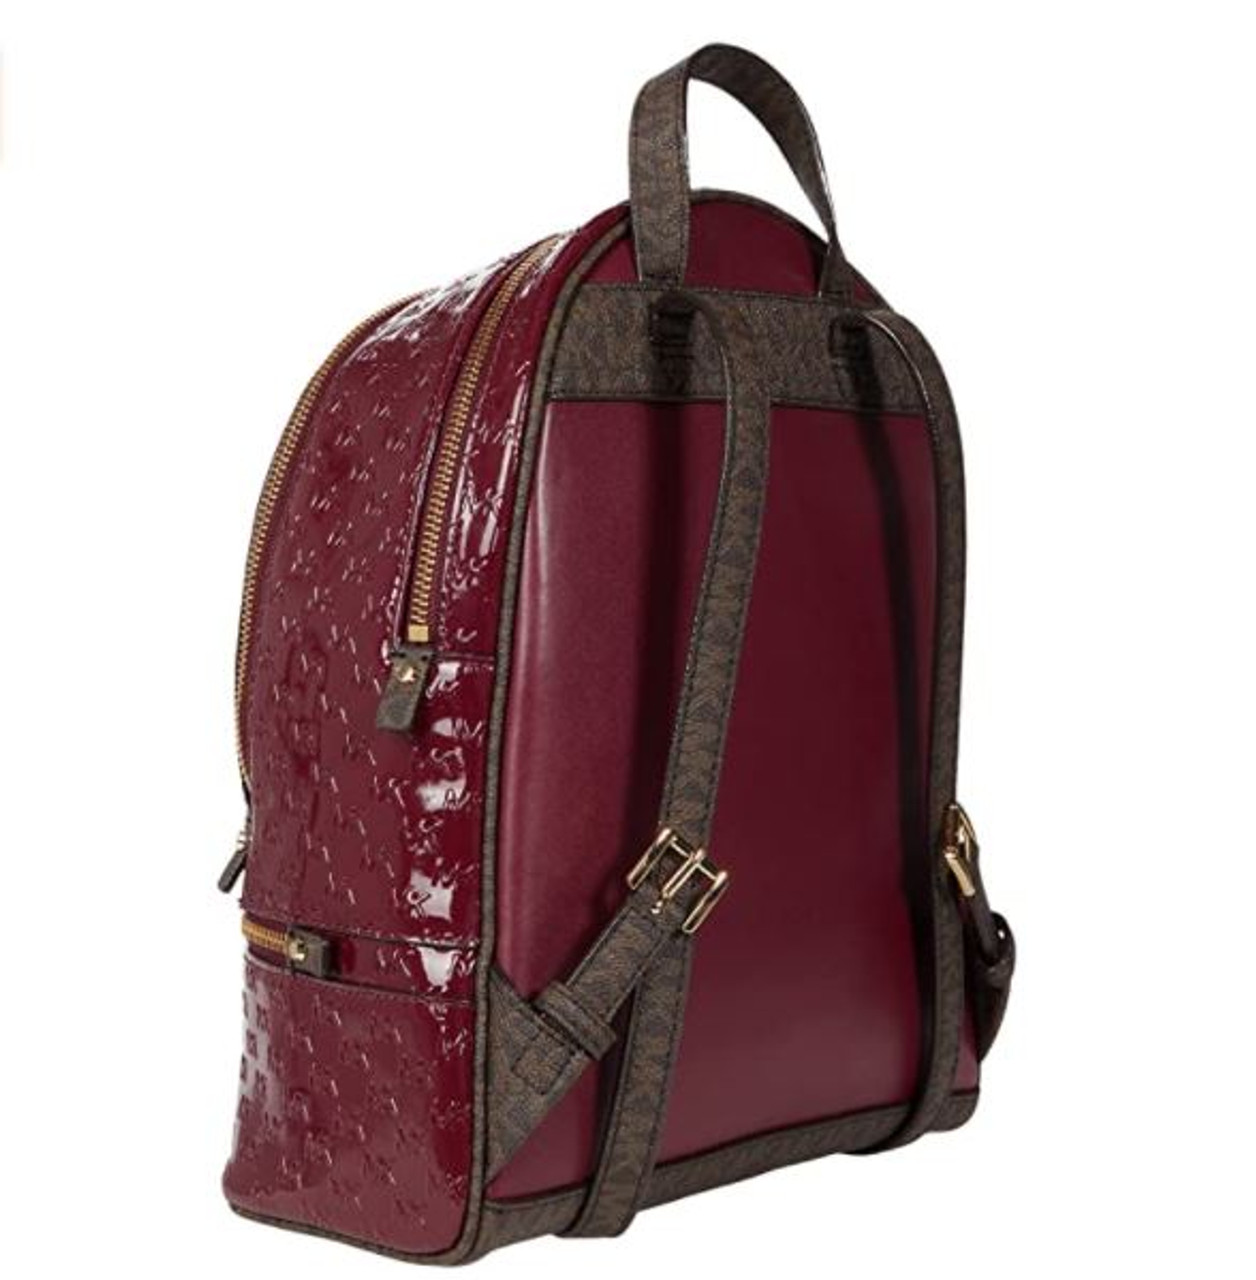 Backpacks Michael Kors - Rhea Zip medium studded black backpack -  30H8GEZB2O001